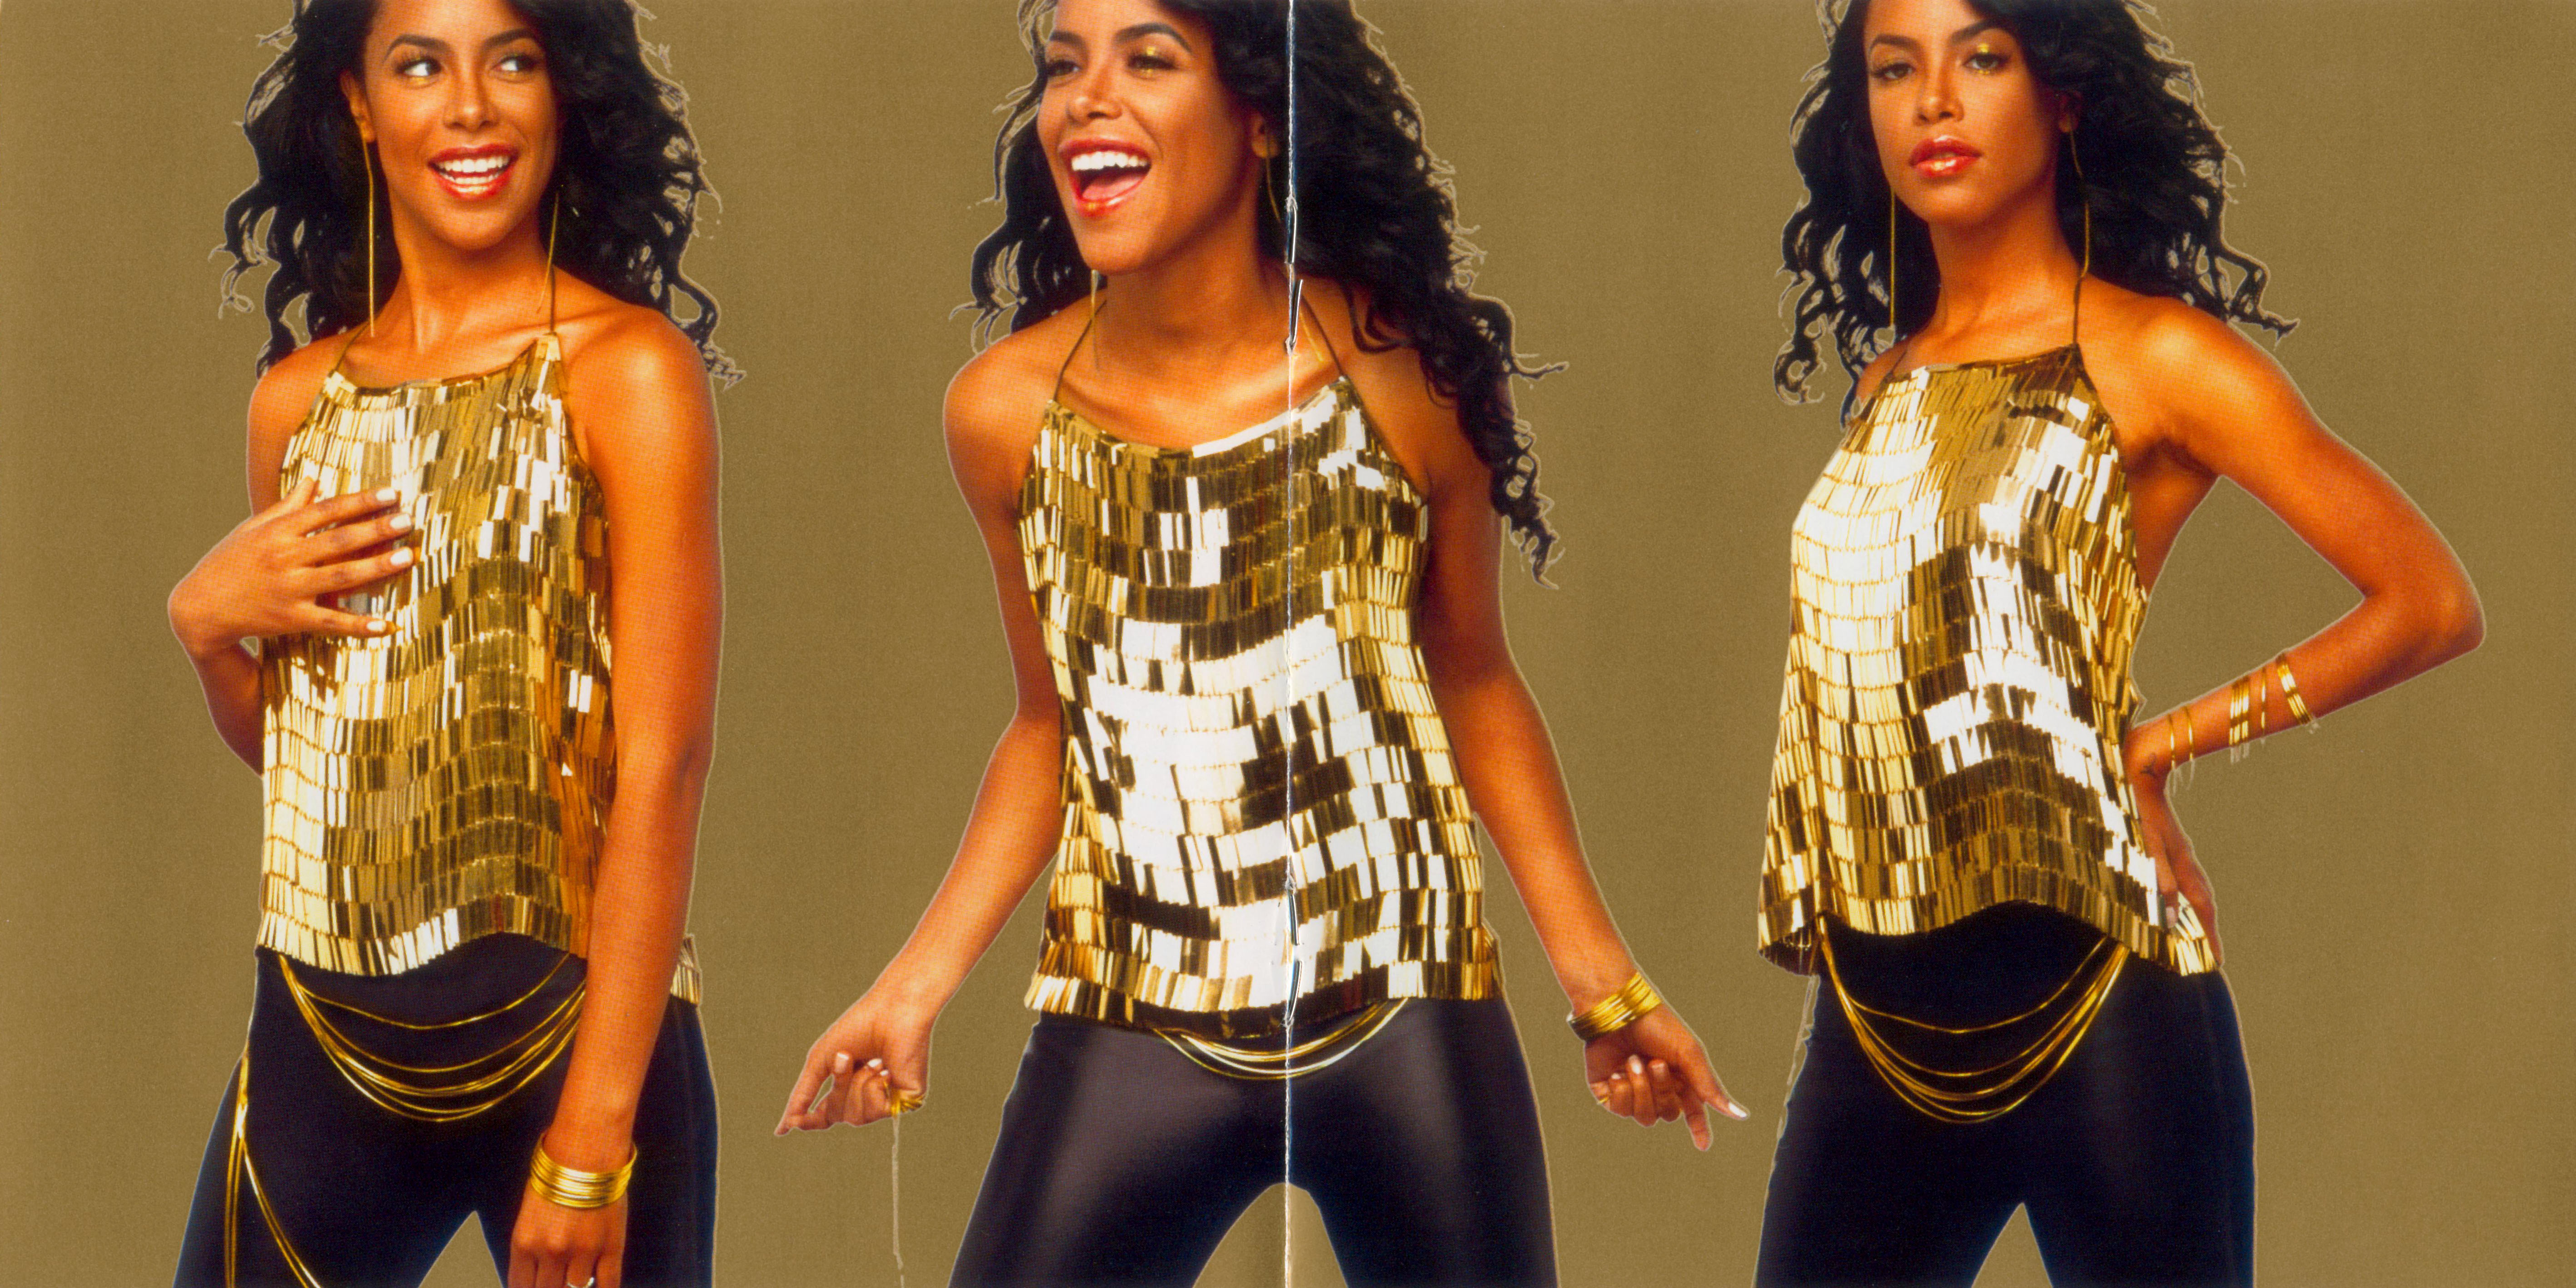 Rare Gem: Aaliyah "Where Could He Be" featuring Missy Elliott & Tweet